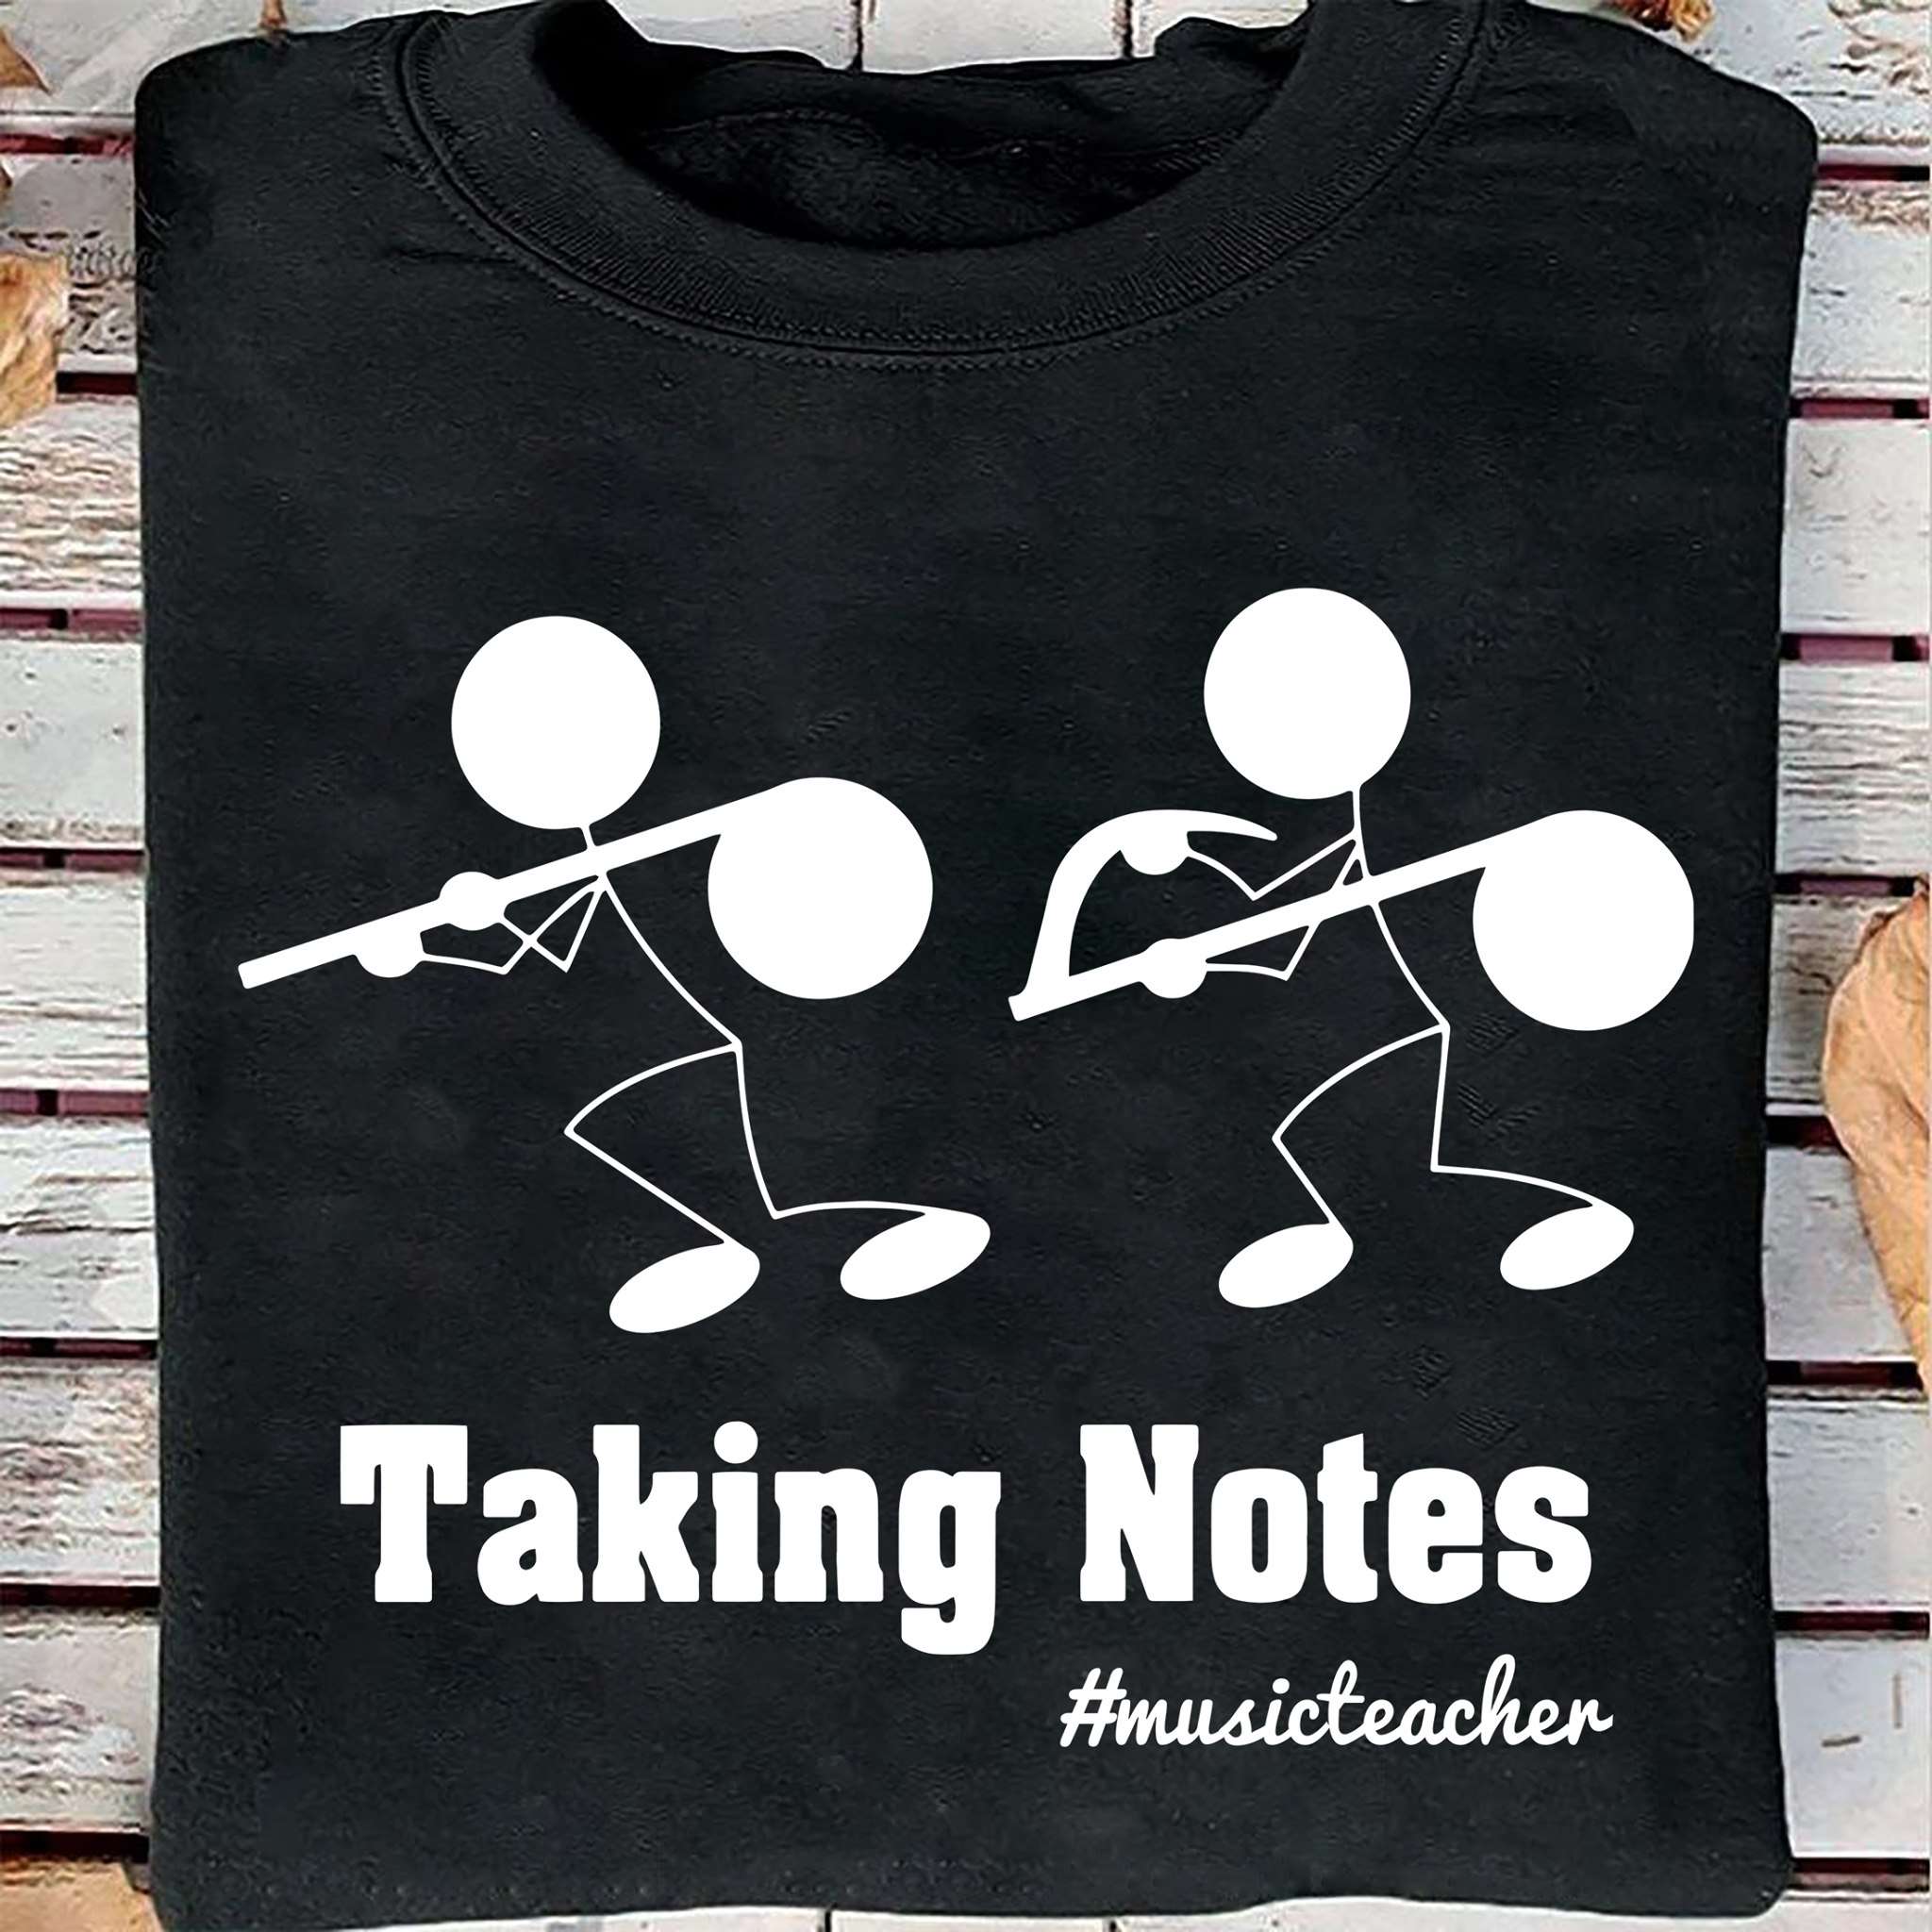 Taking notes - Music teacher, music notes taking